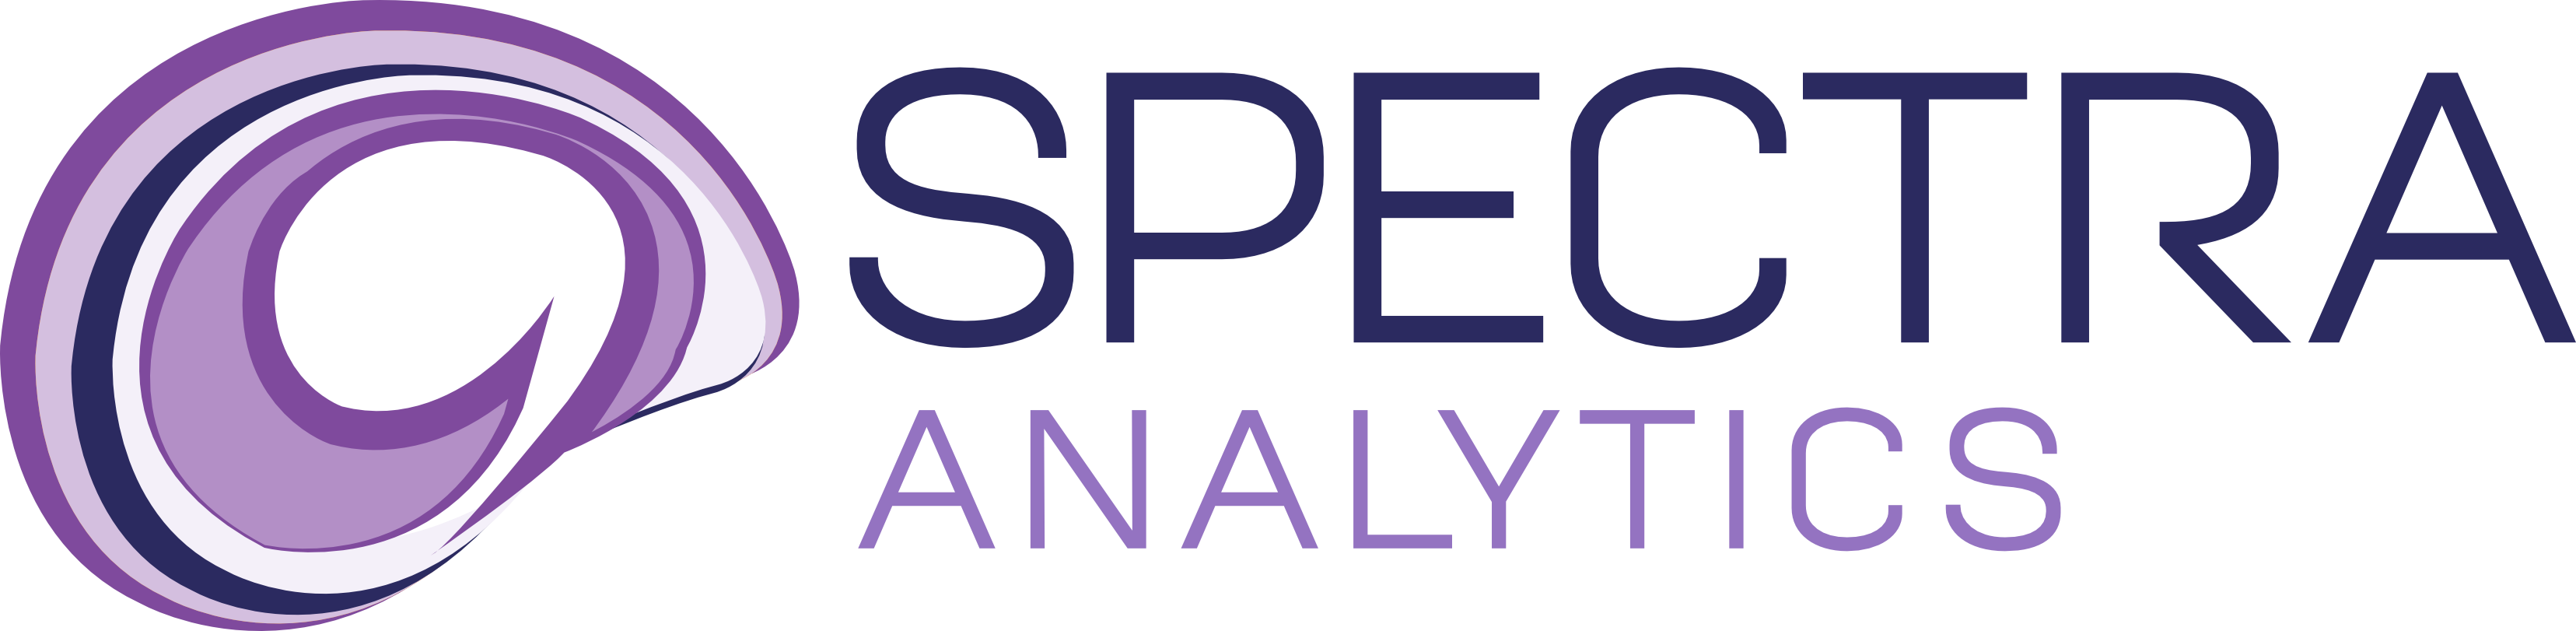 Spectra Analytics logo.